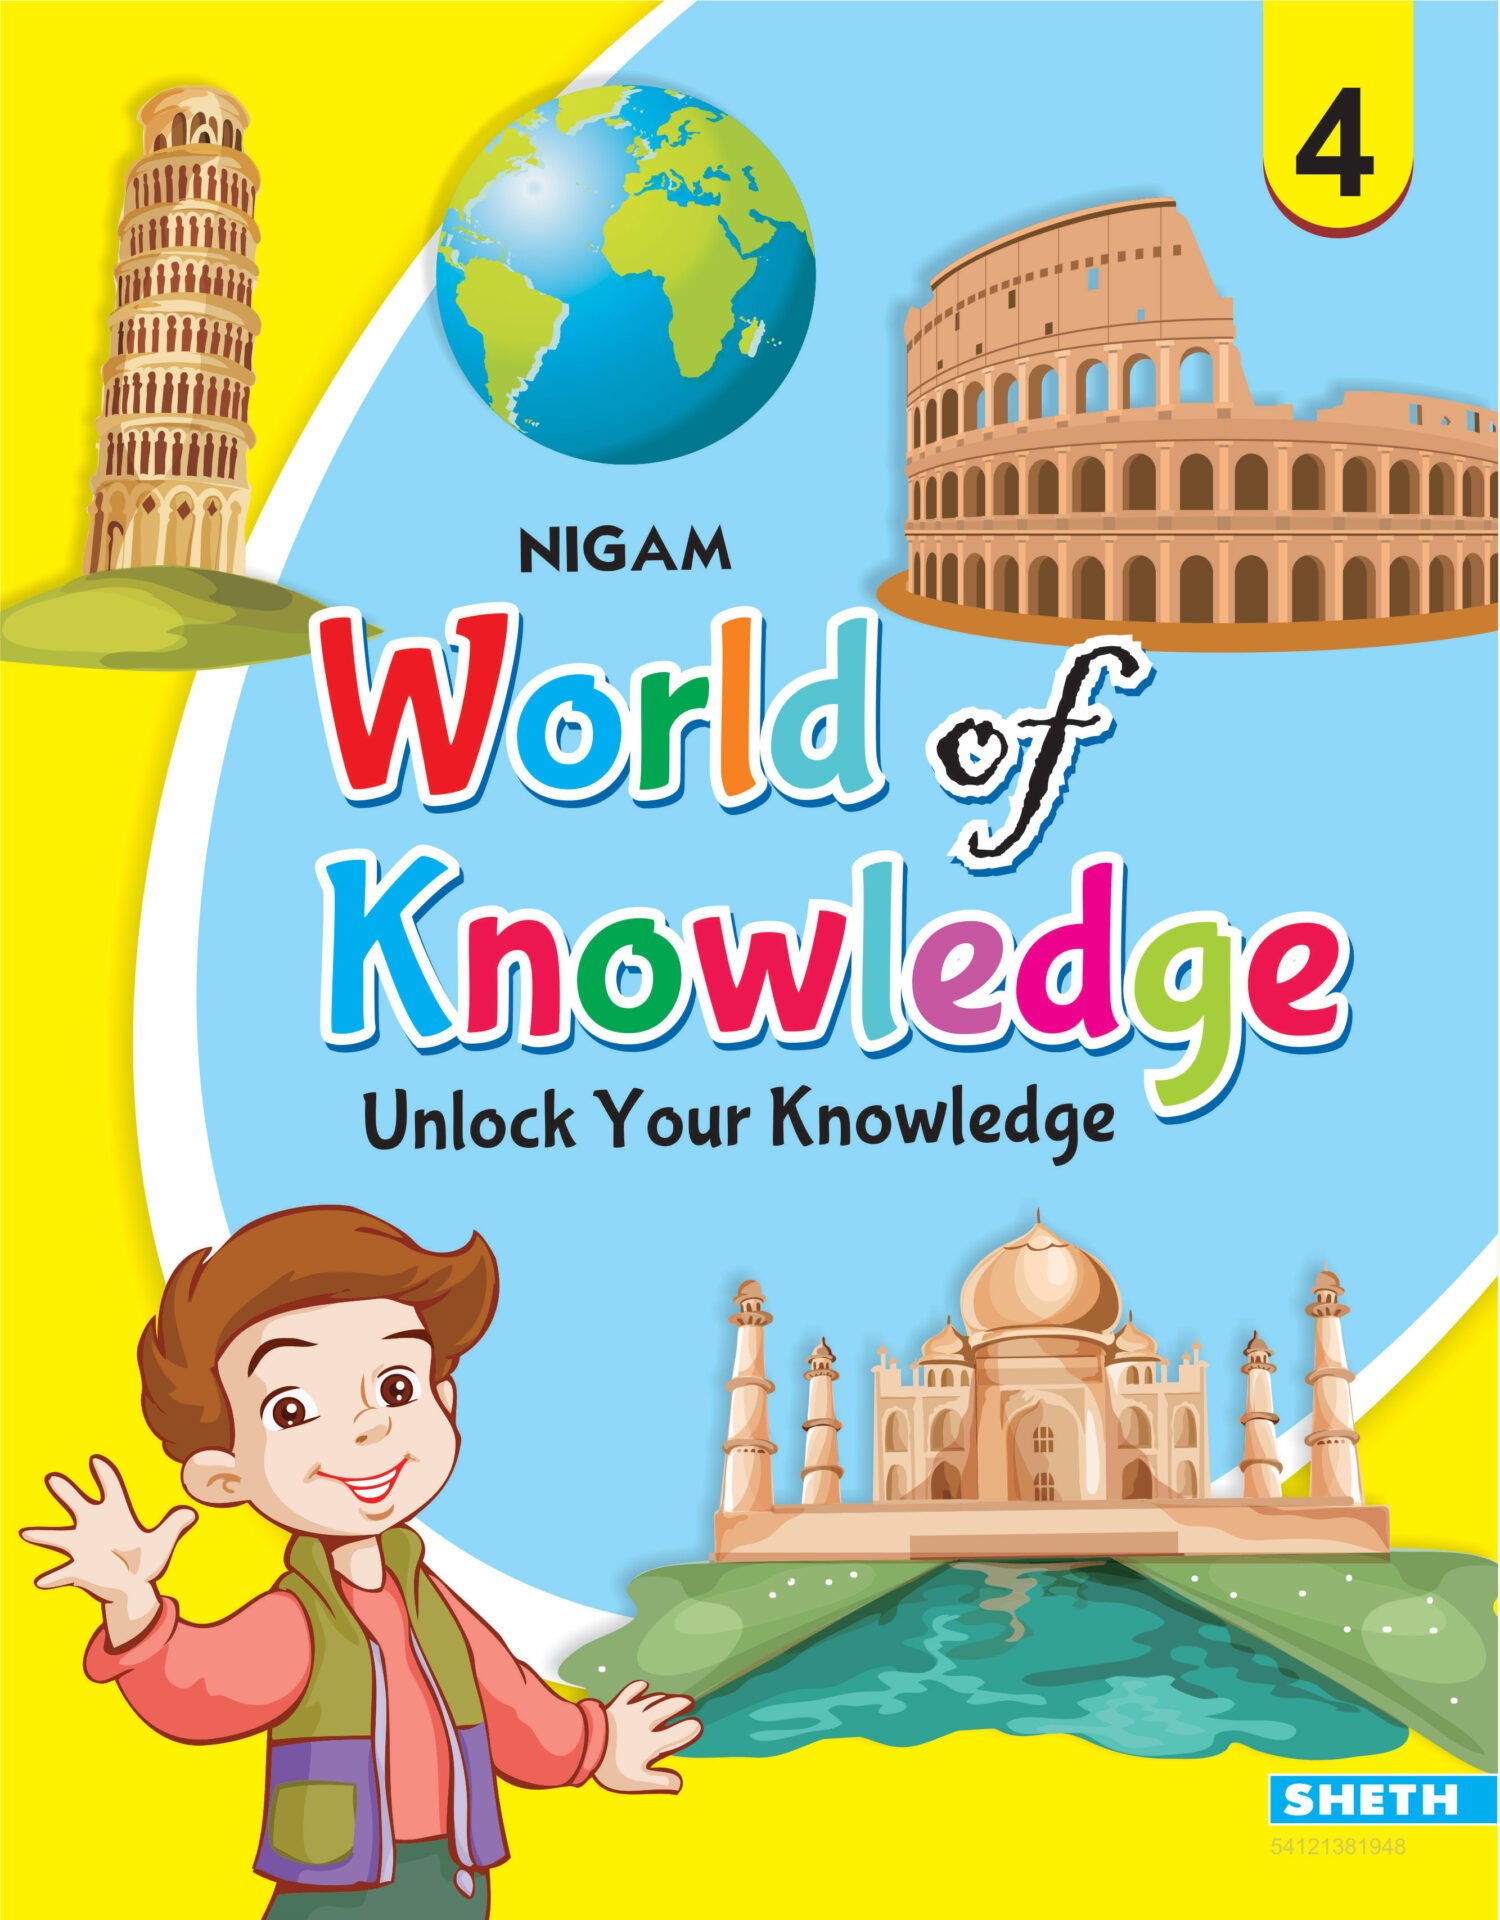 Nigam World of Knowledge 4 1 1